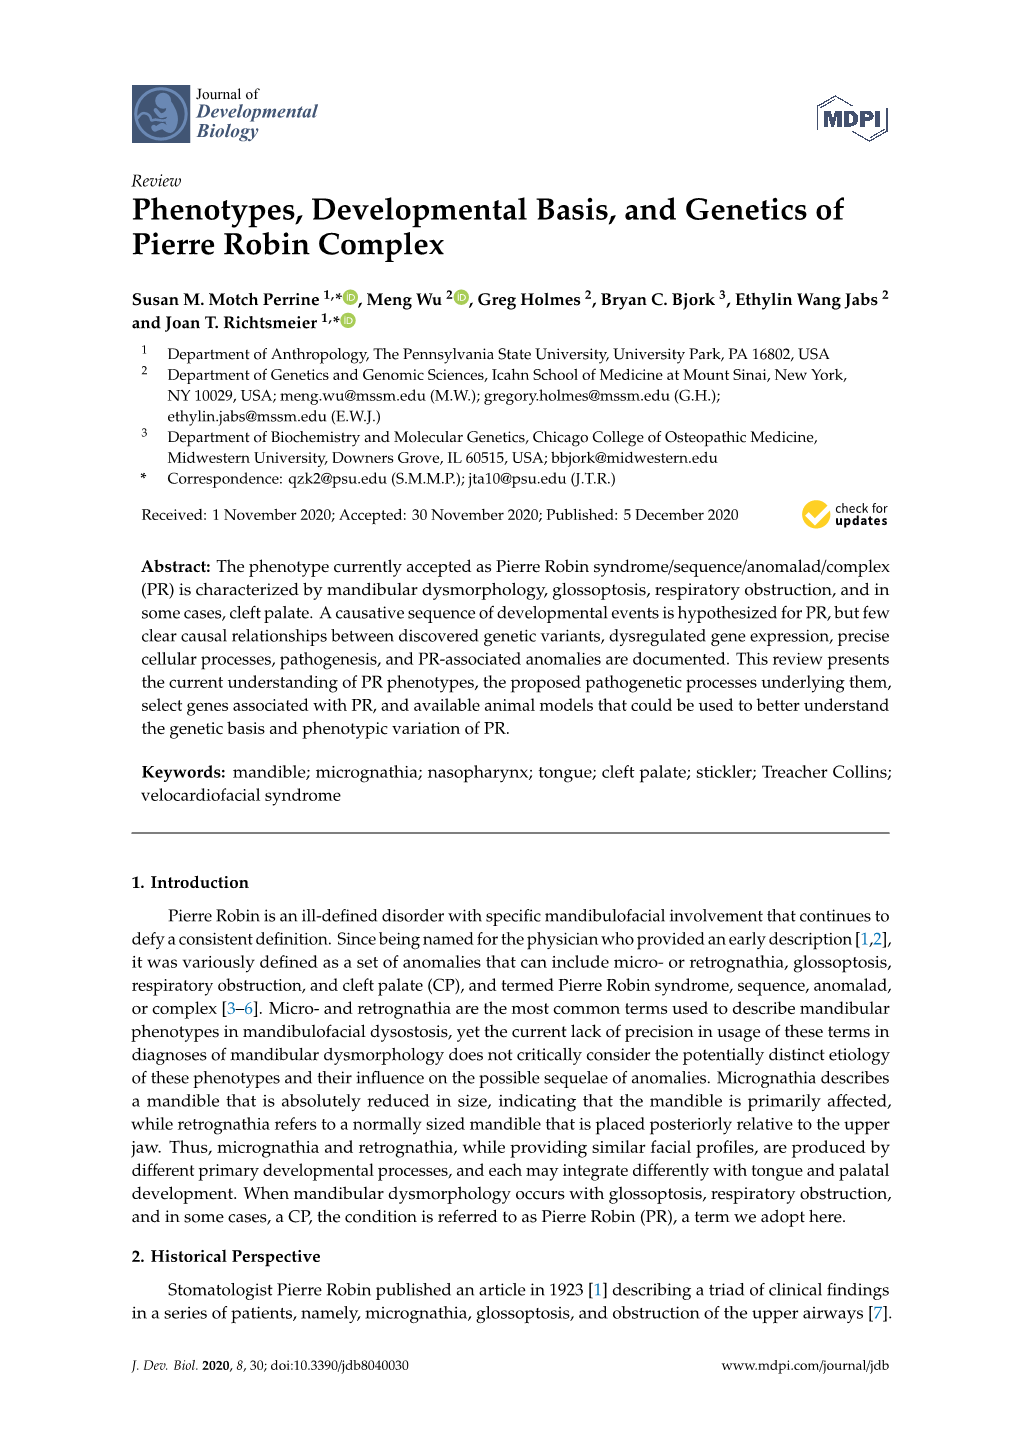 Phenotypes, Developmental Basis, and Genetics of Pierre Robin Complex